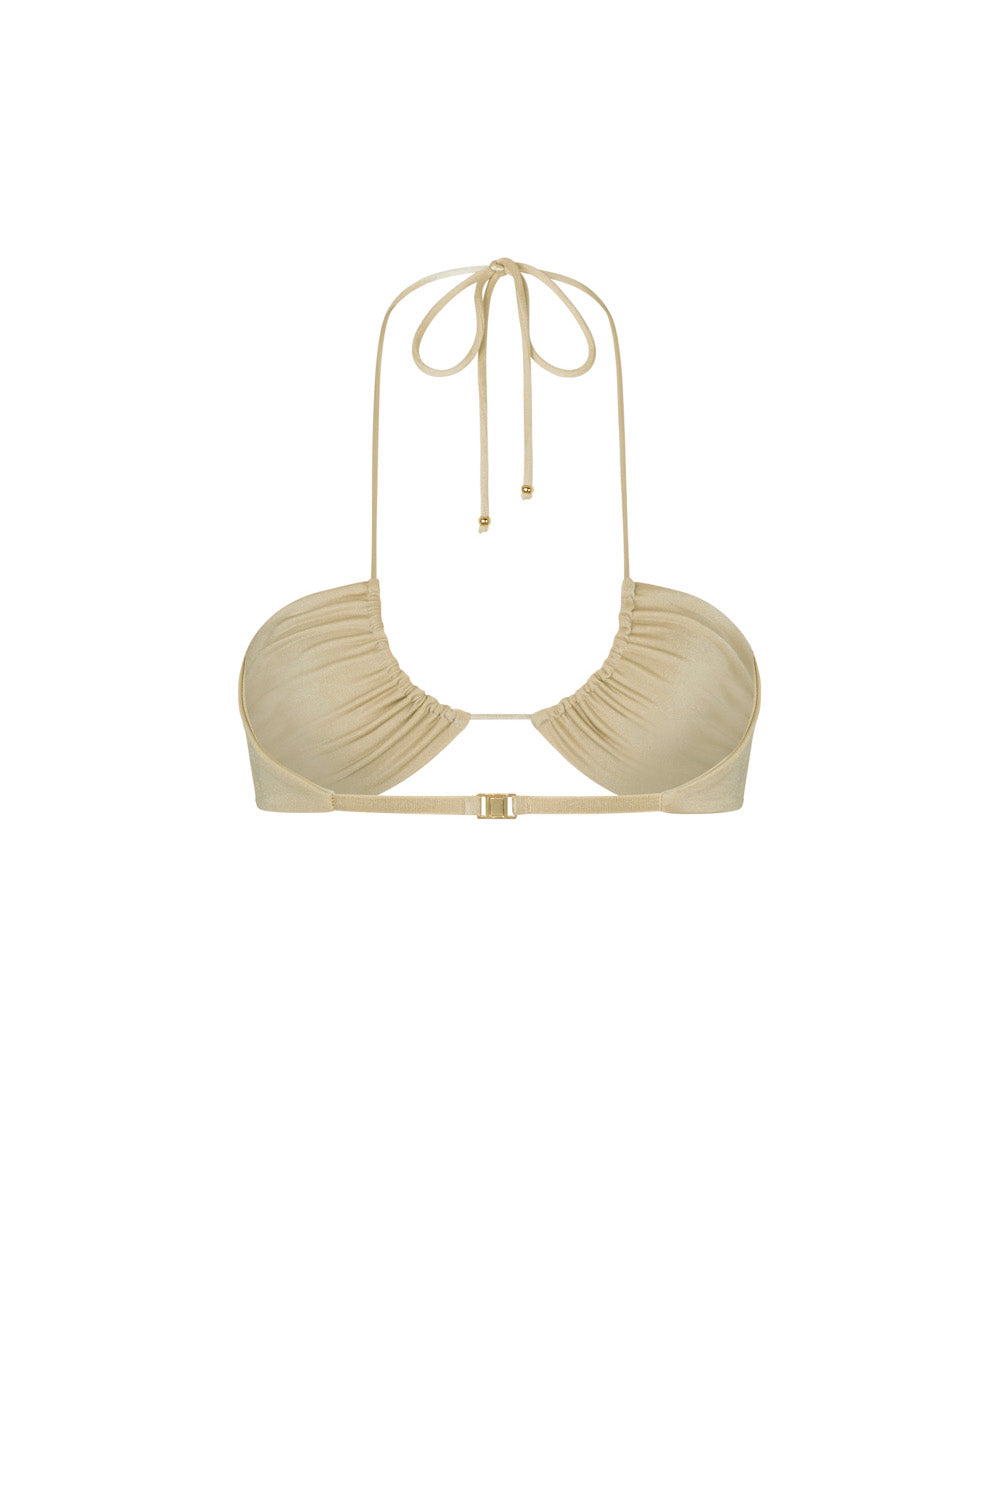 flook the label malani top swimwear gold product image back